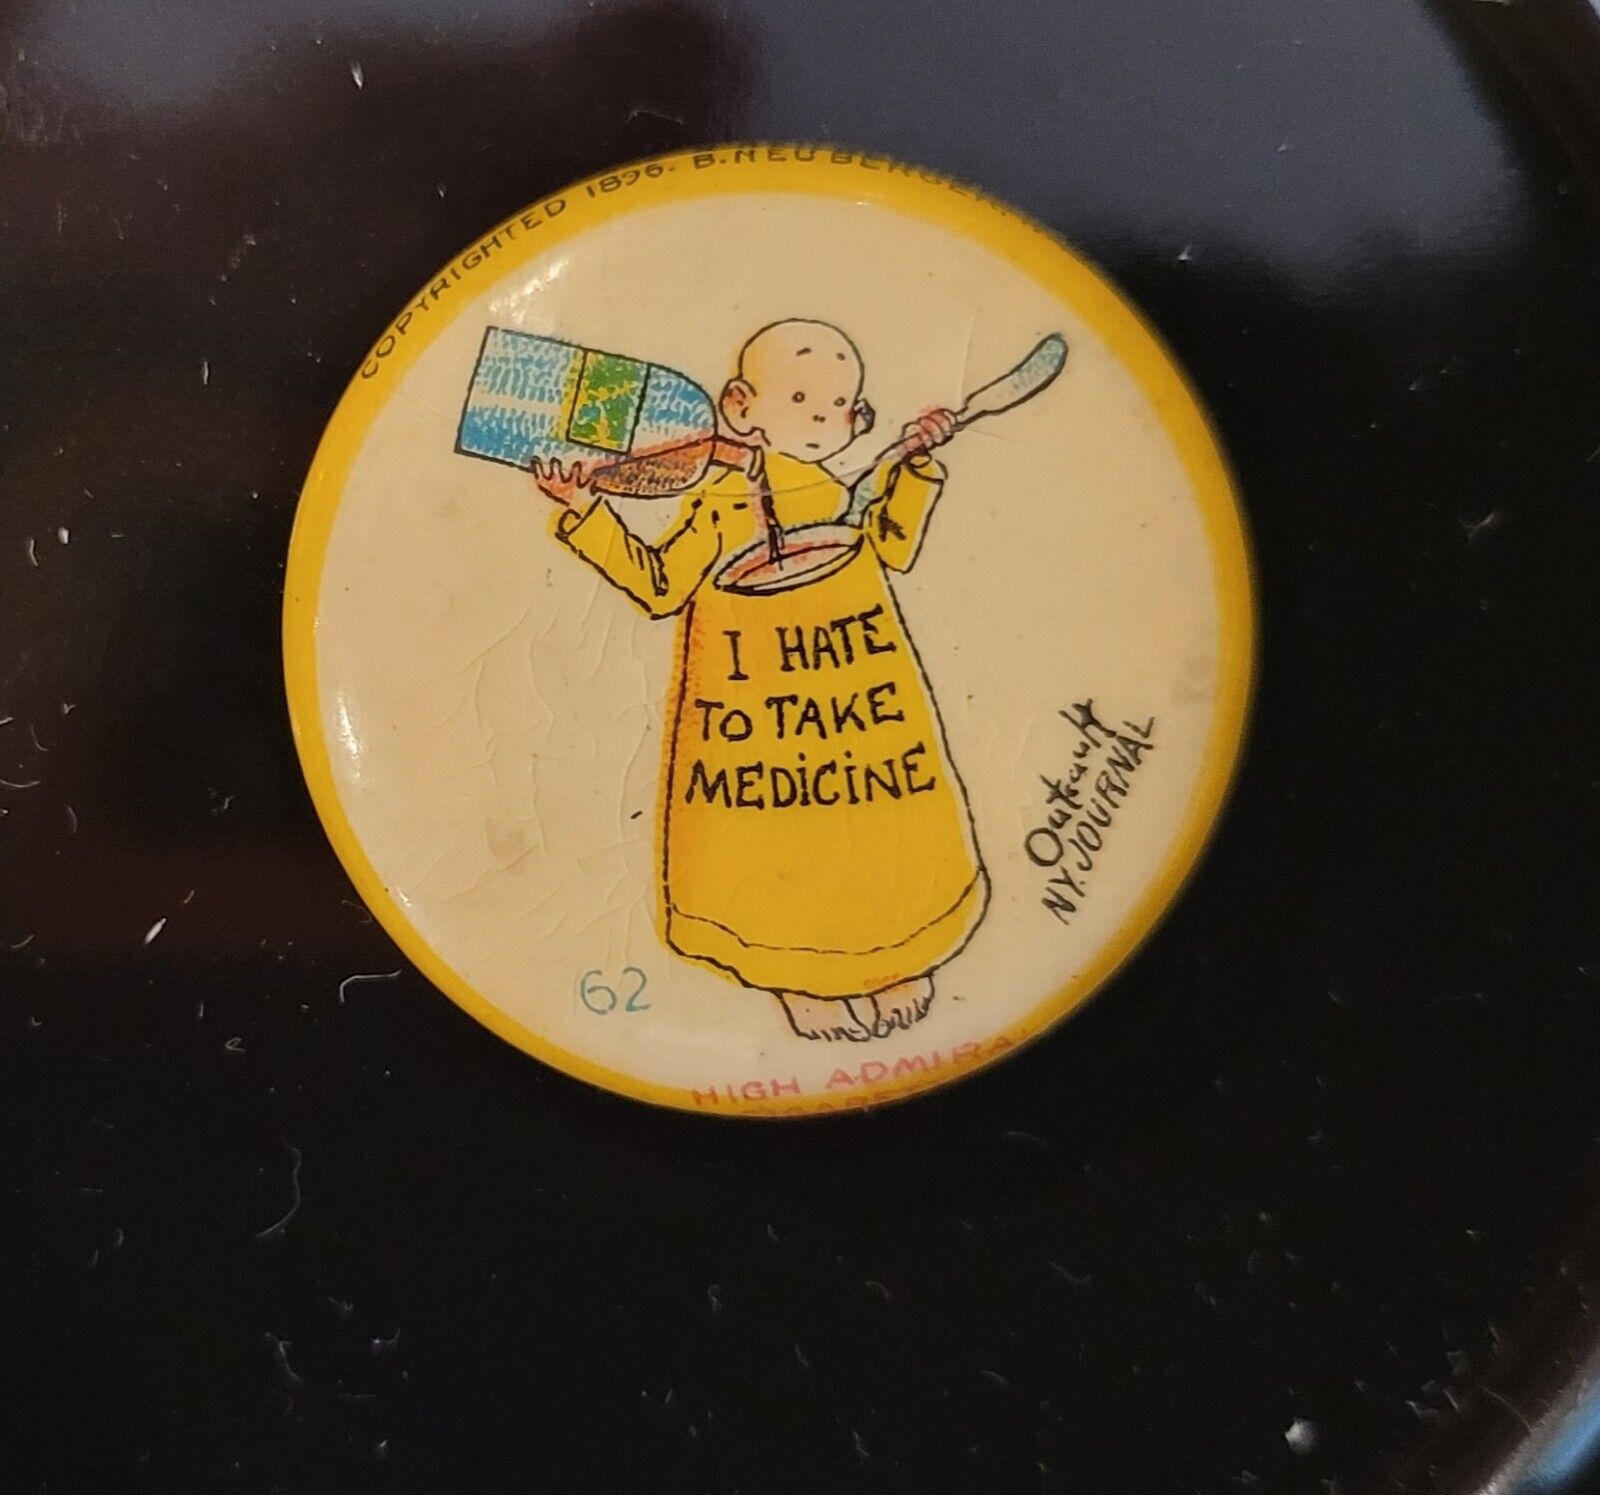 1896 High Admiral Cigarettes The Yellow Kid #62 Pin Pinback Button Medicine